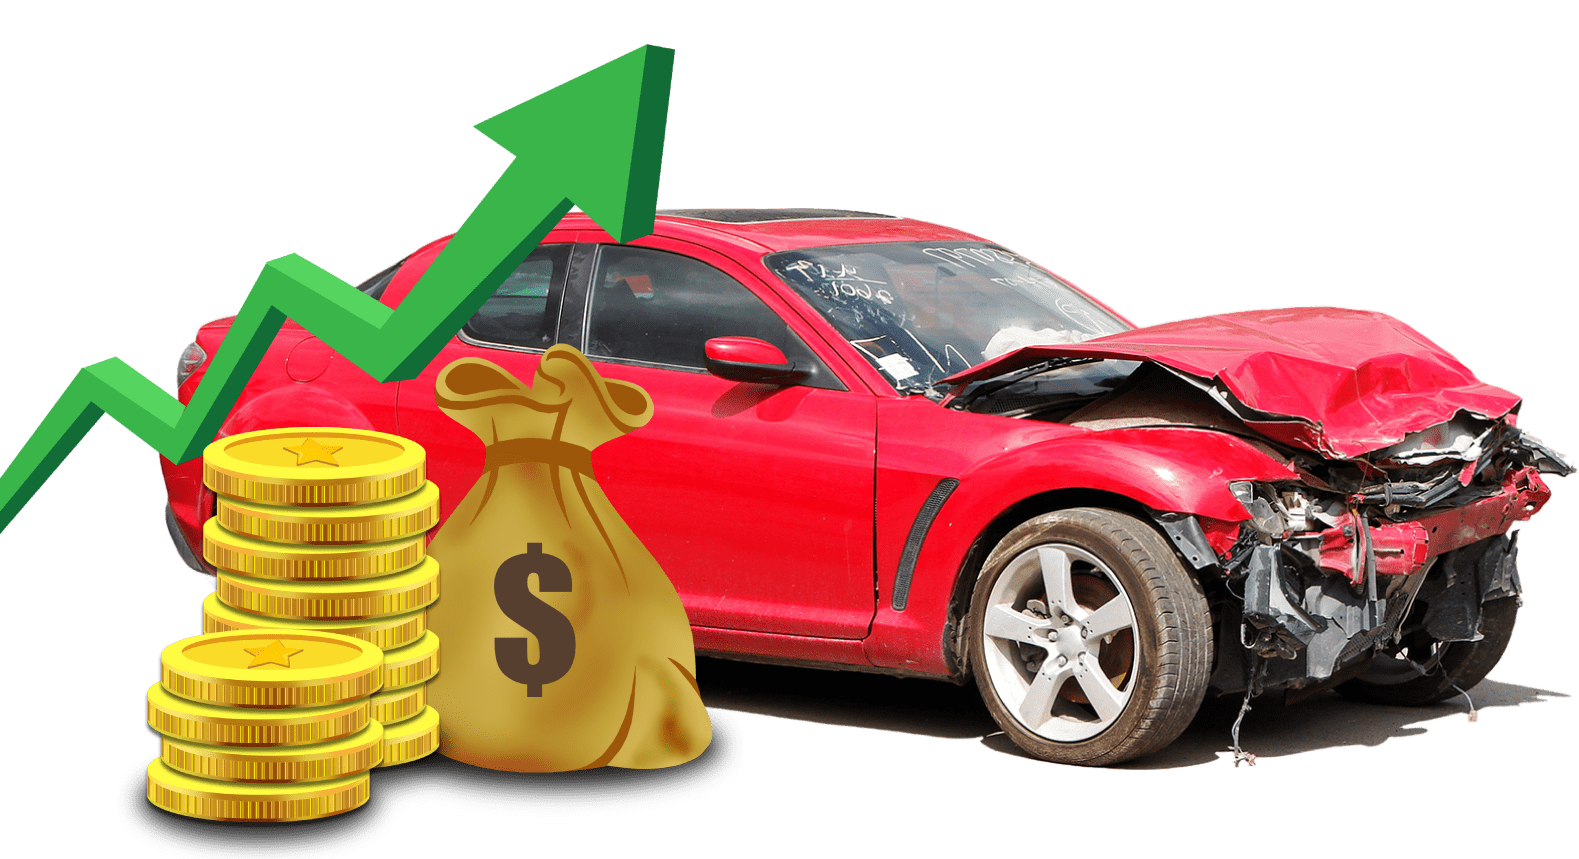  Cash for scrap cars White Rock 